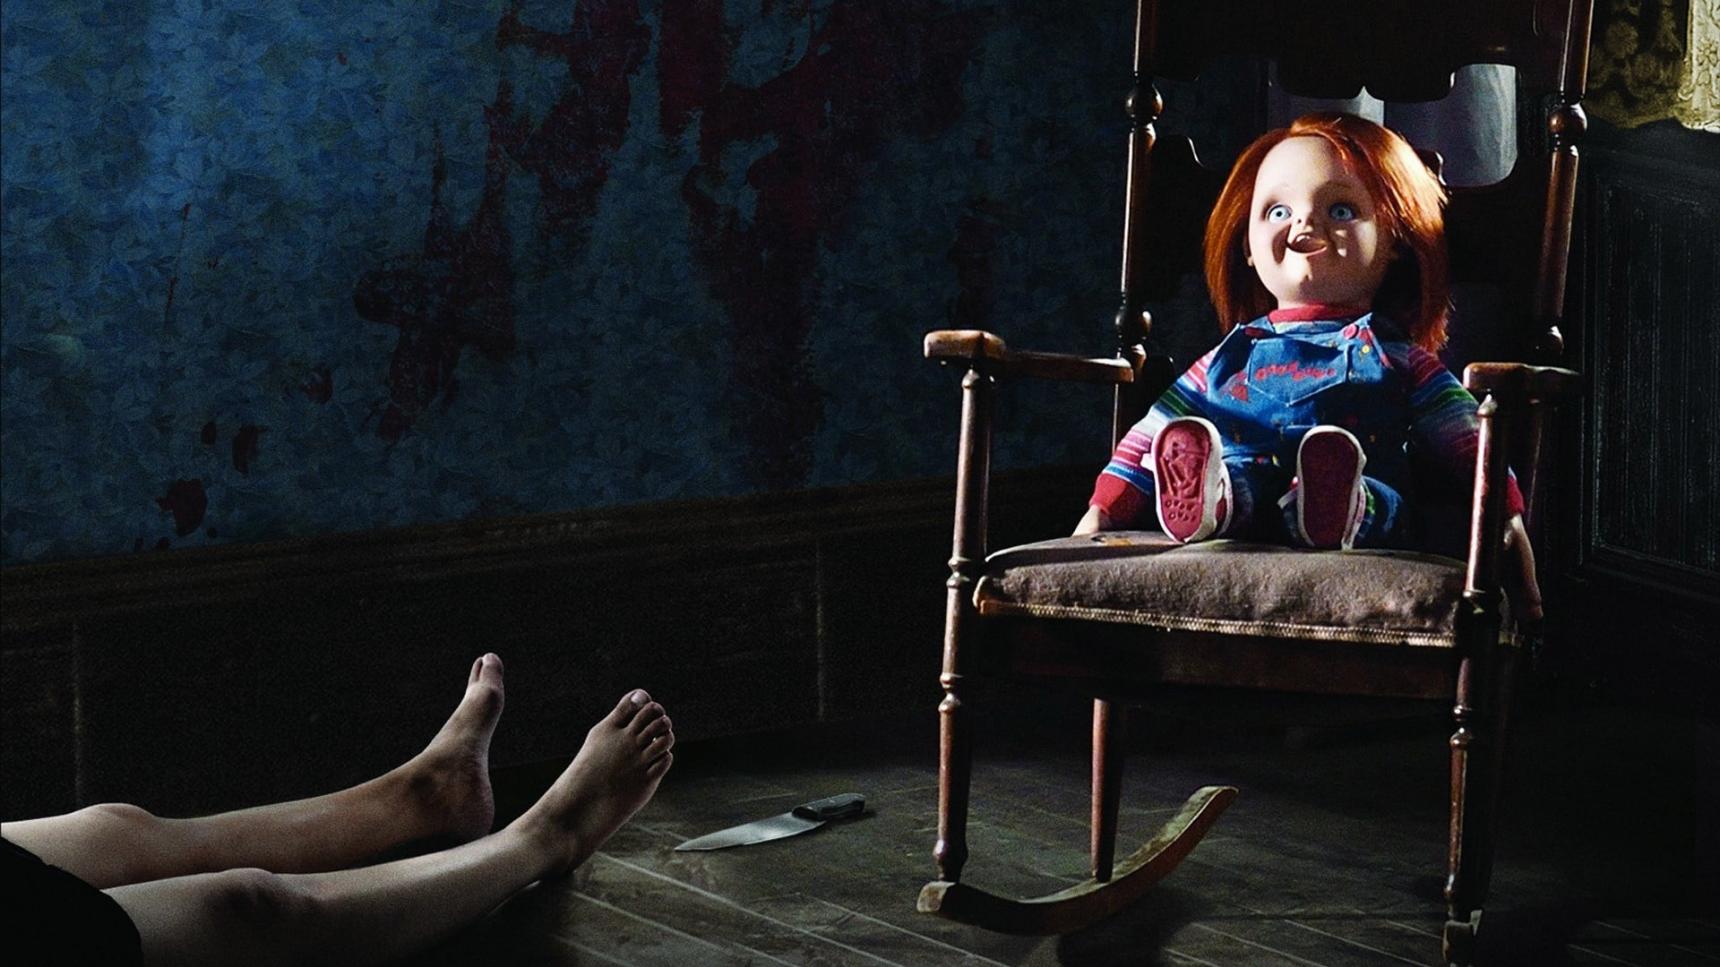 poster de La maldición de Chucky